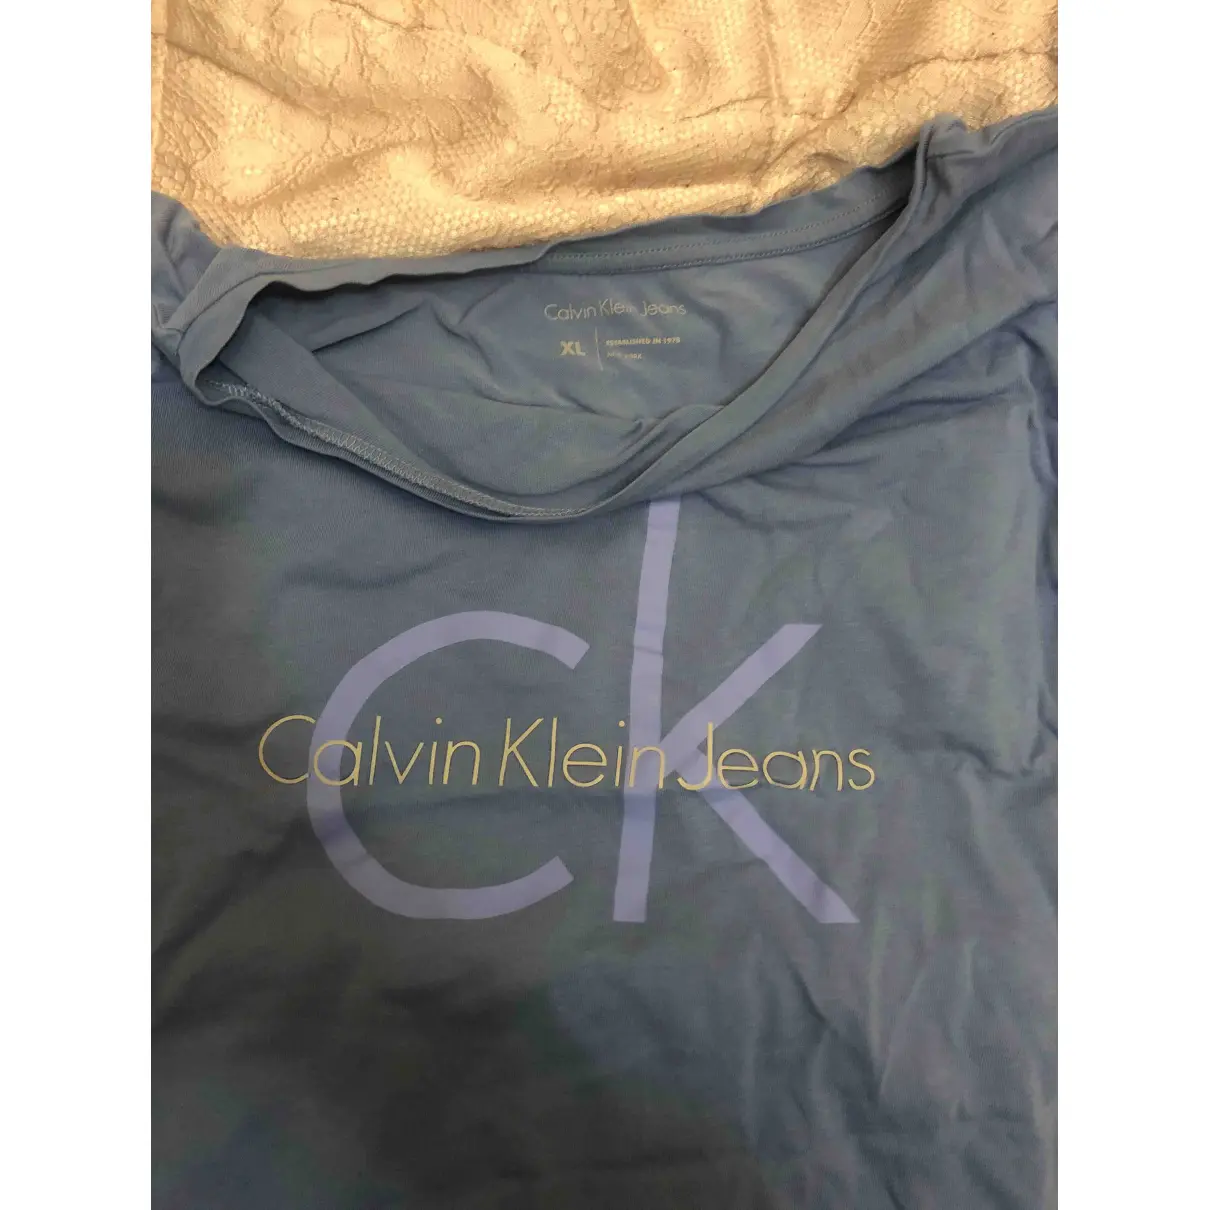 Buy Calvin Klein Turquoise Cotton Top online